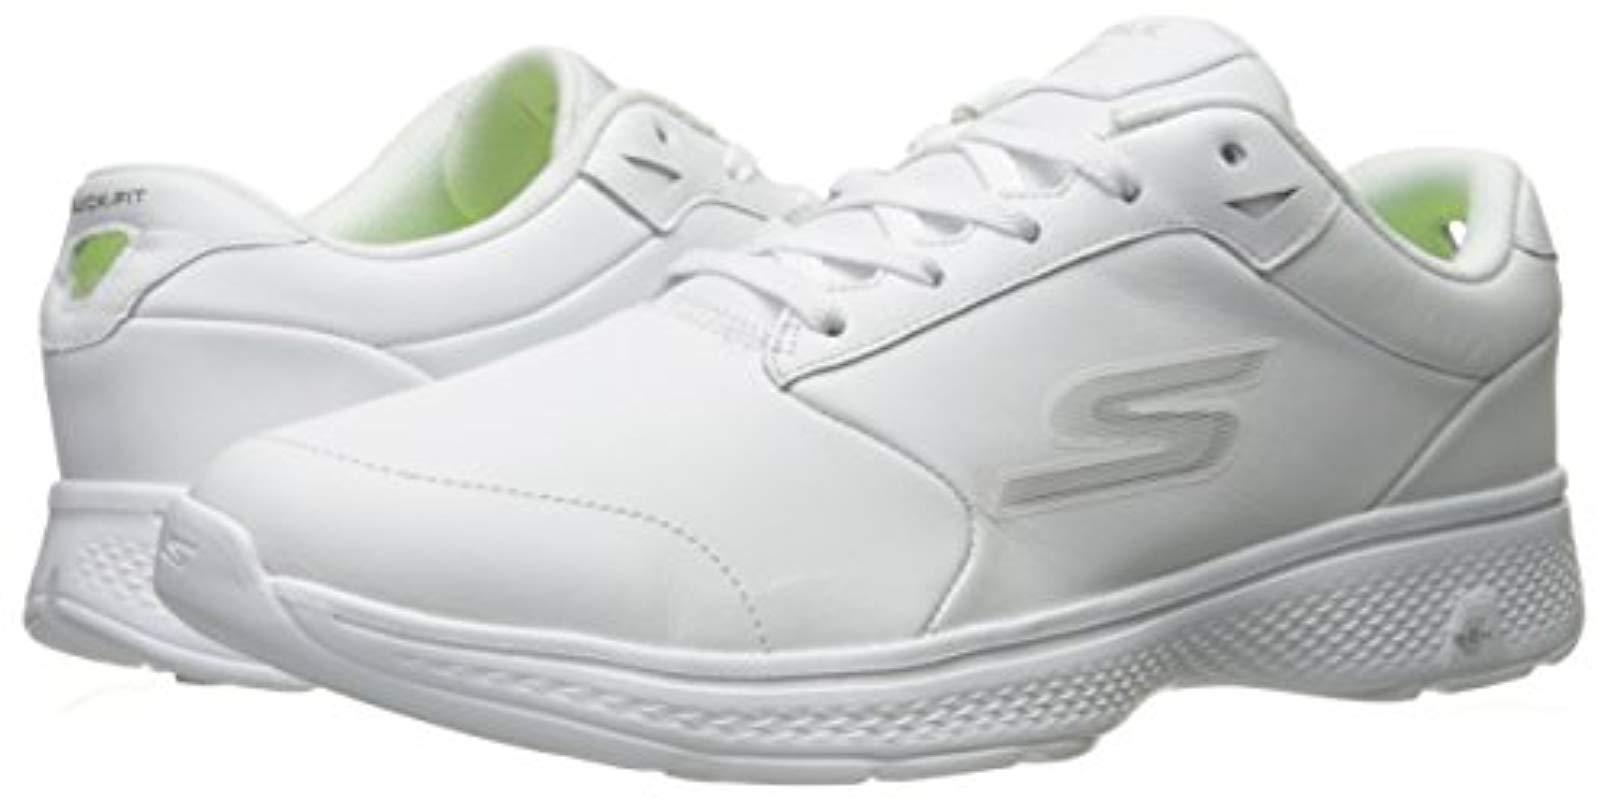 Skechers Men's White Performance Go Walk 4 Complete Leather Shoe